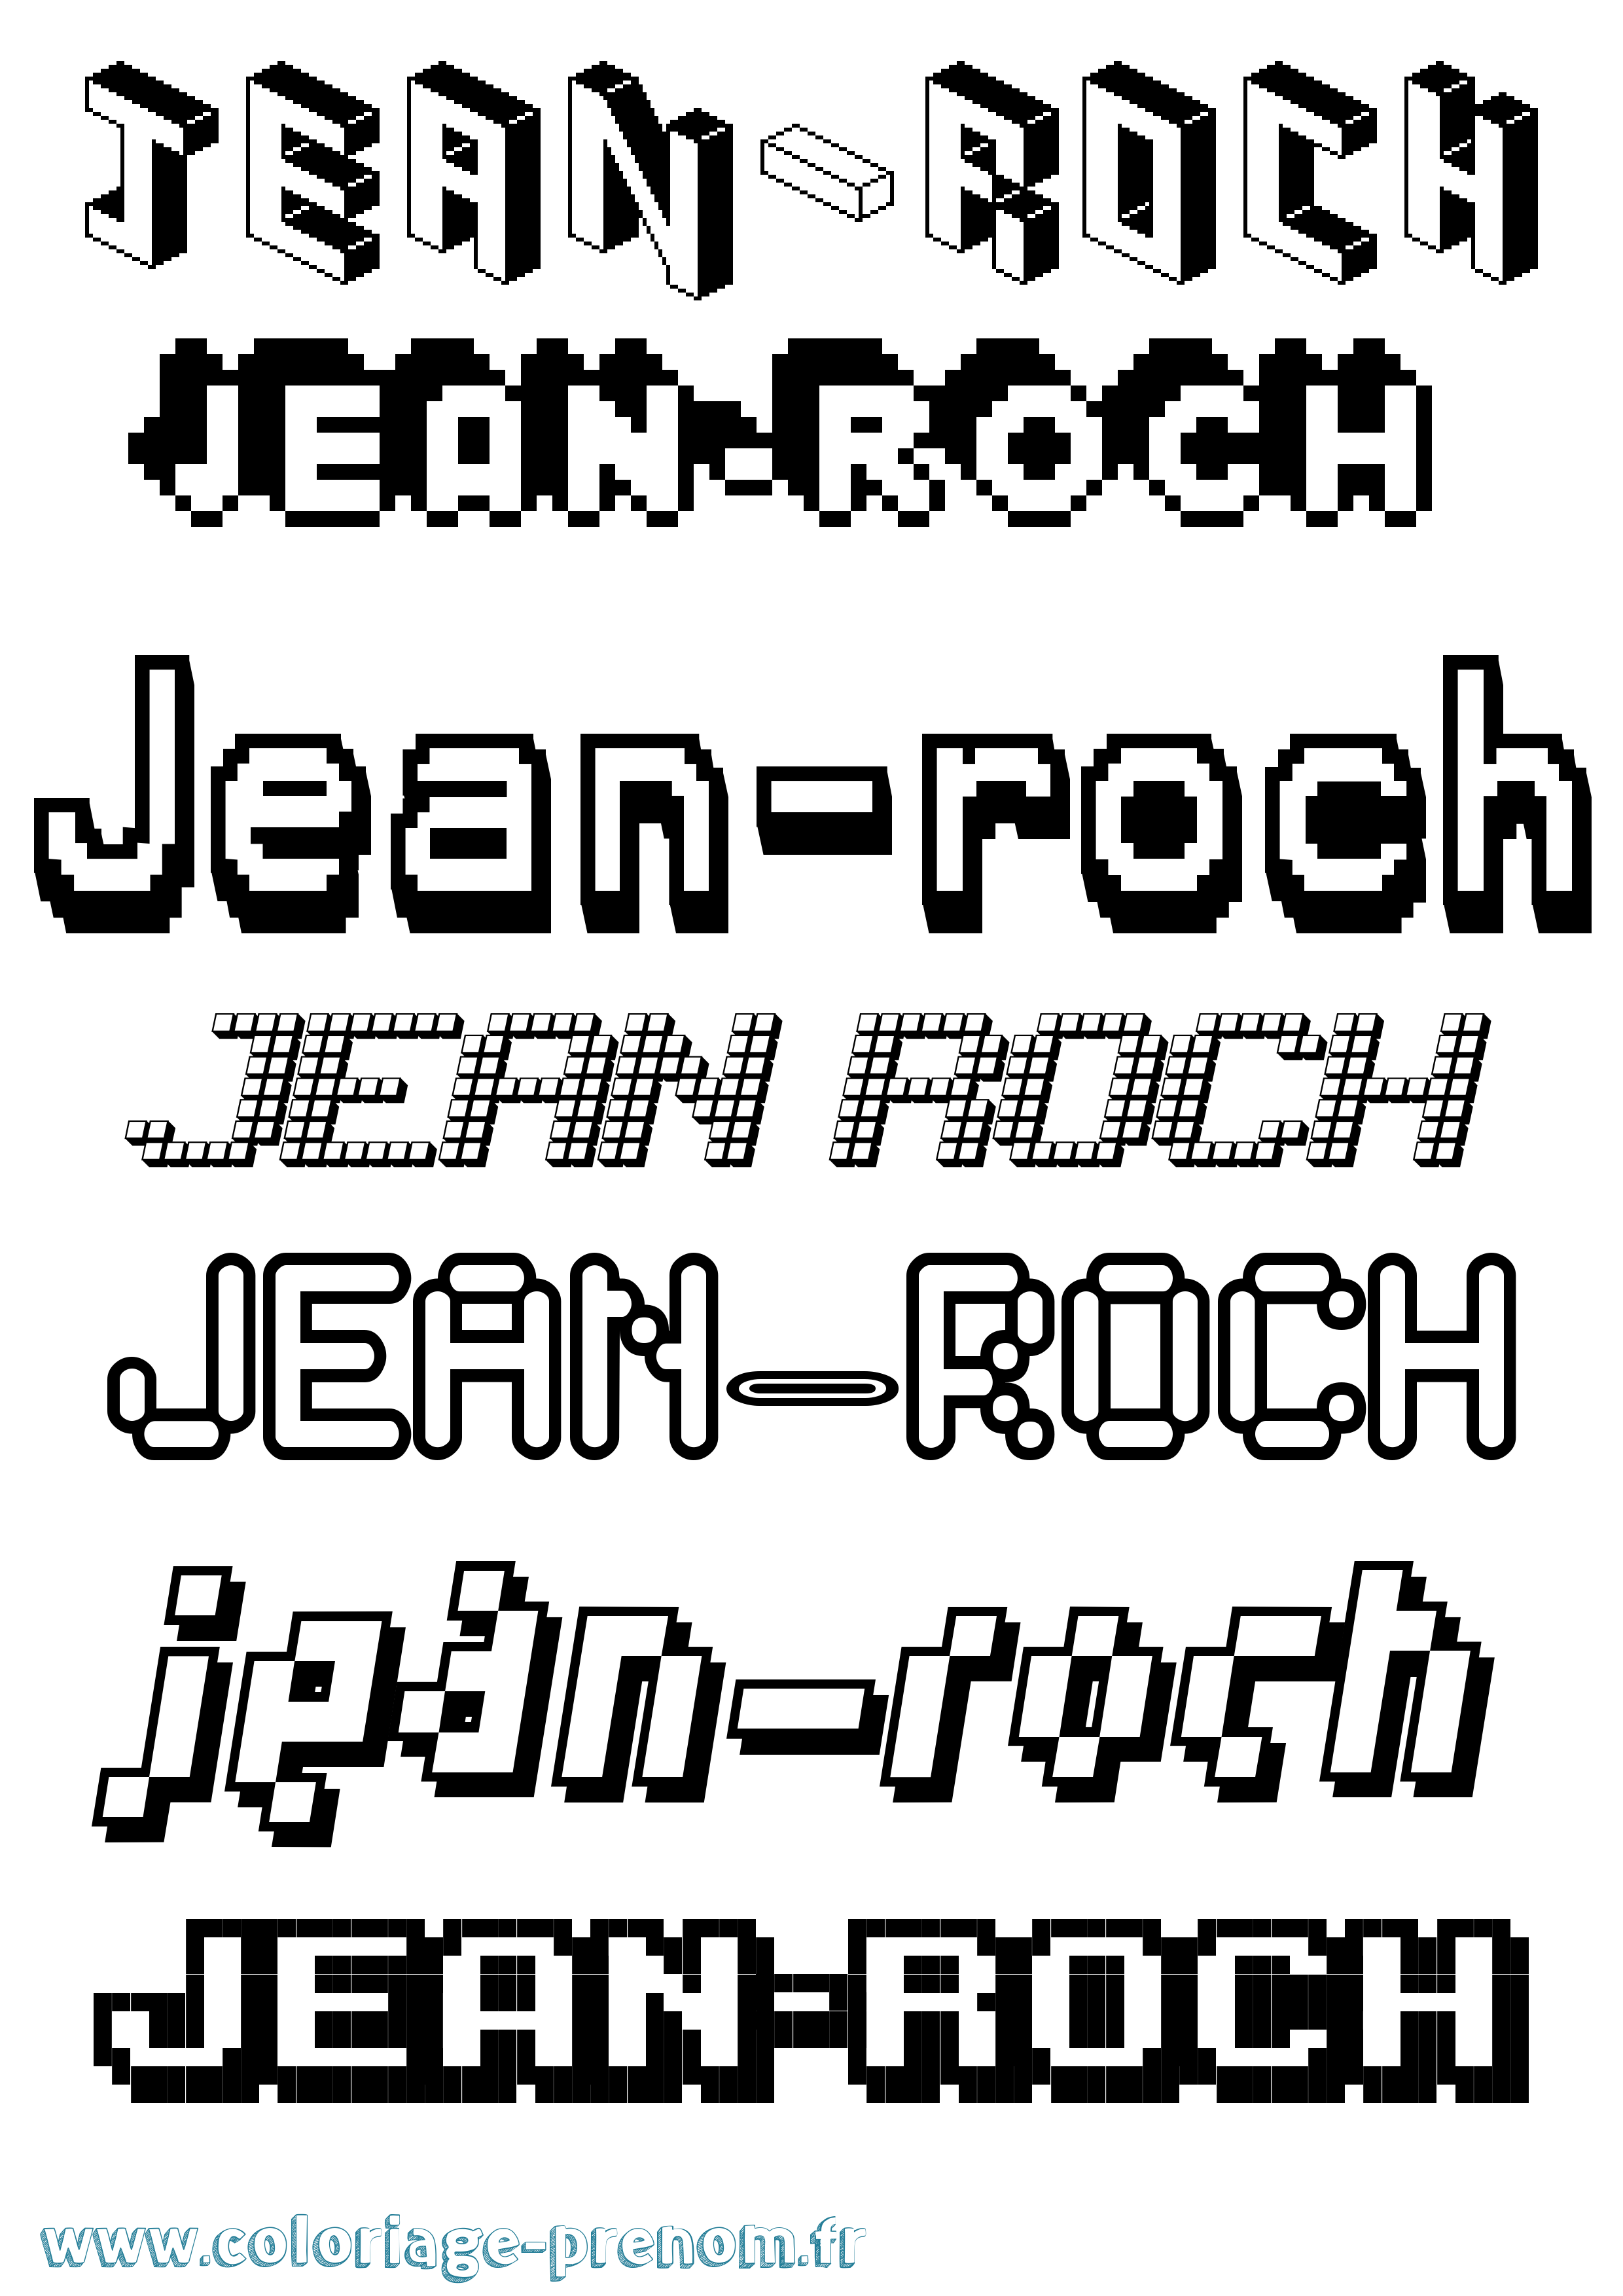 Coloriage prénom Jean-Roch Pixel